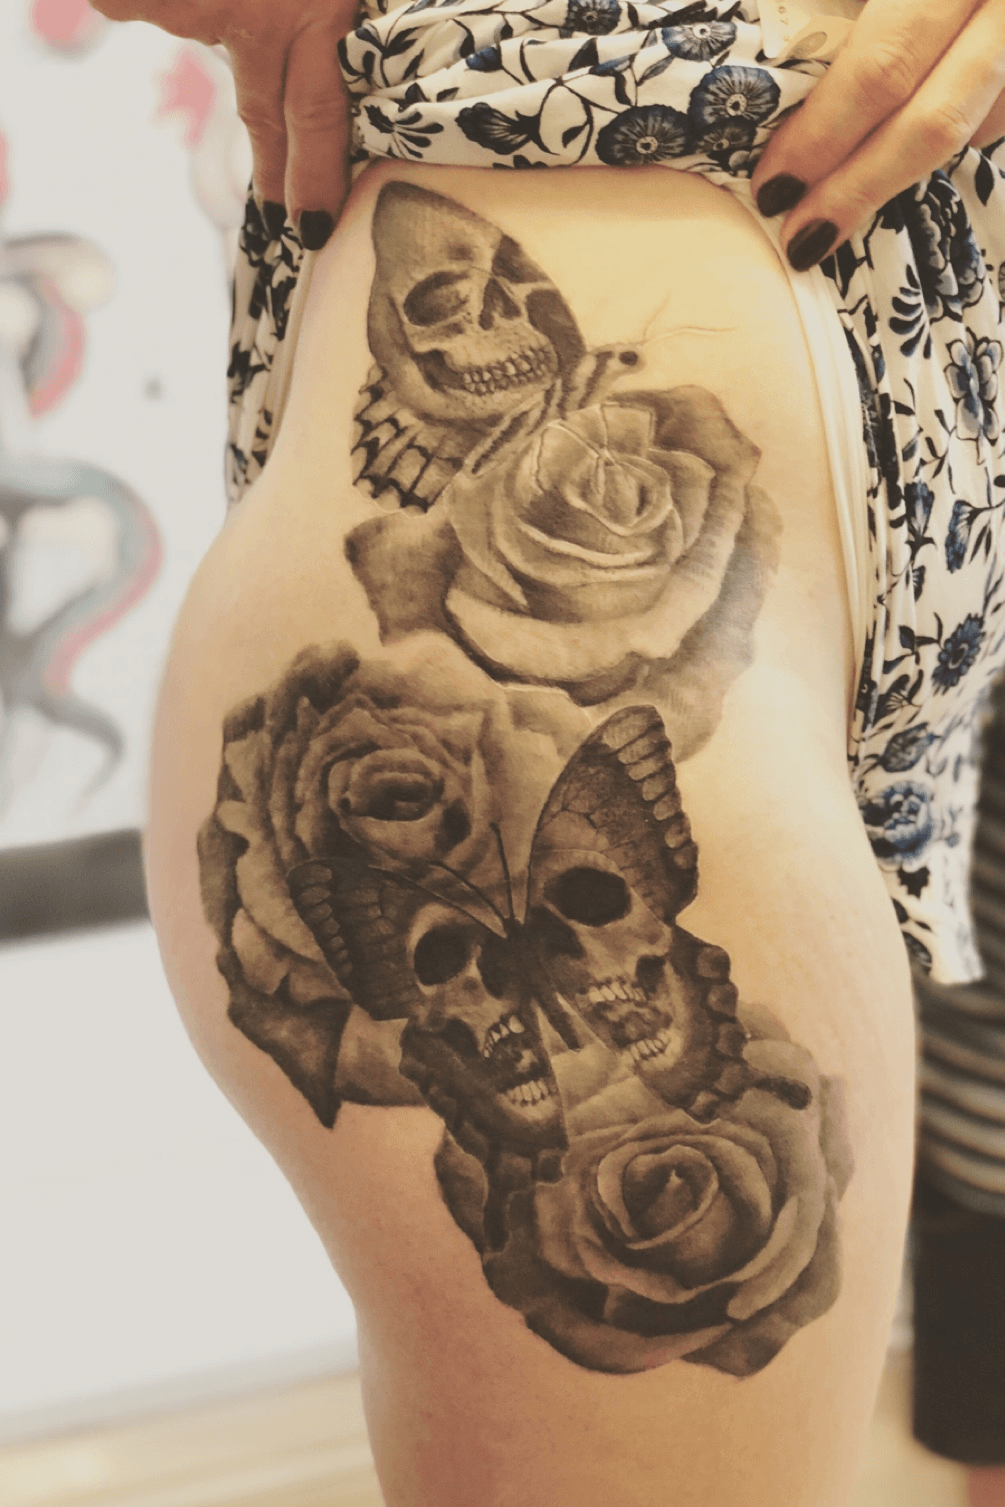 35 Flower Skull Tattoos  Feminine Skull Tattoos For Girls